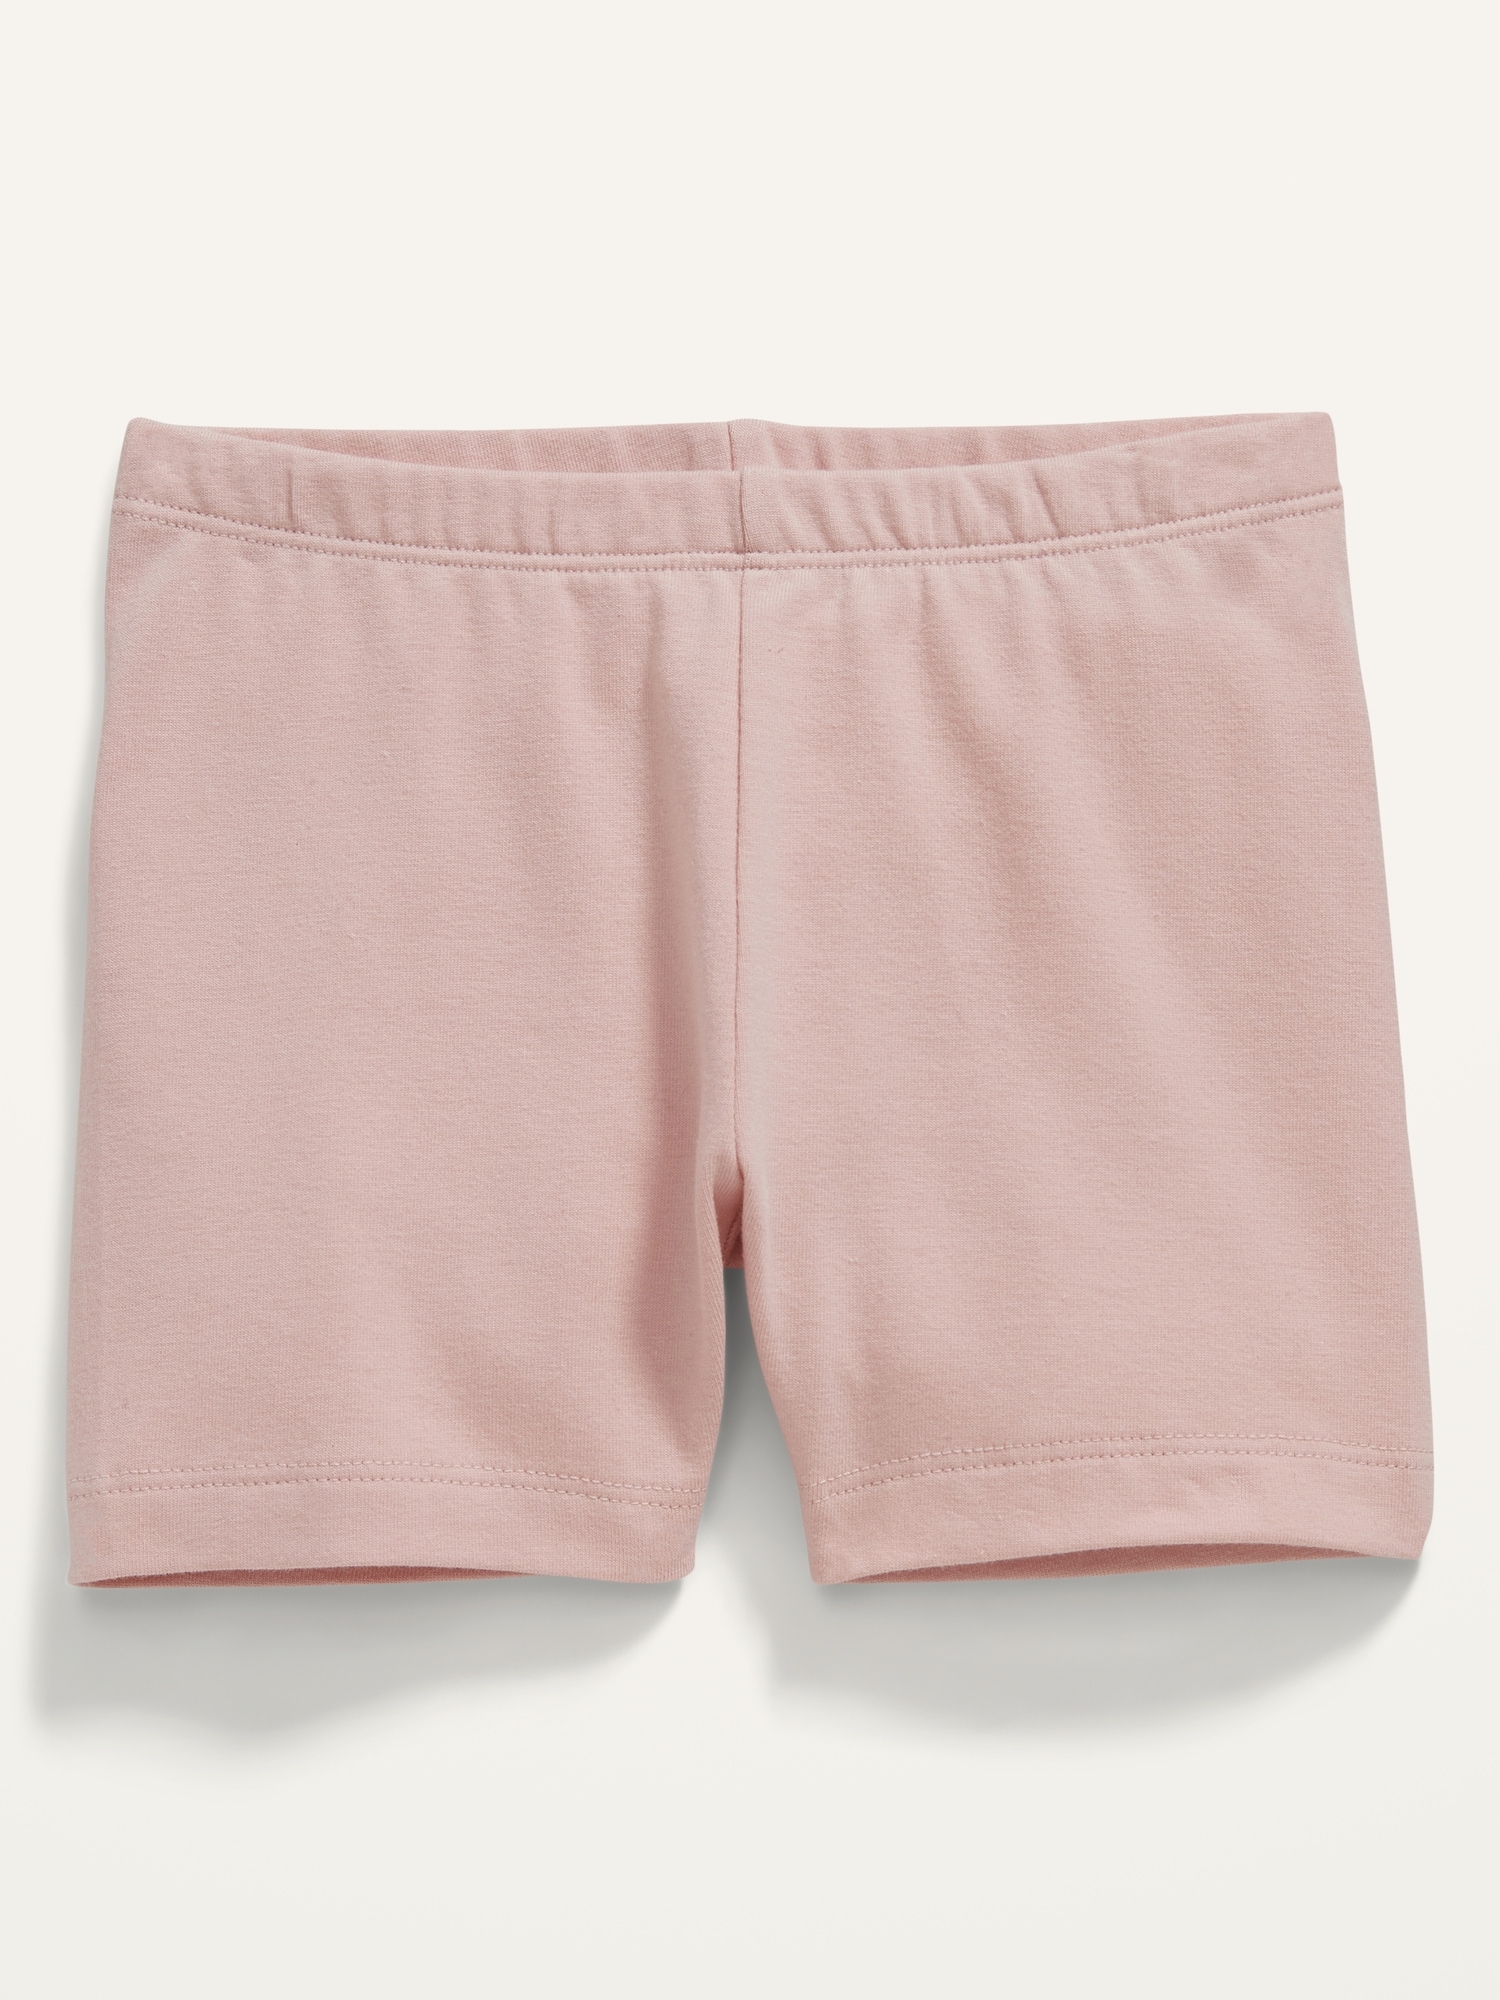 Jersey-Knit Biker Shorts for Toddler Girls